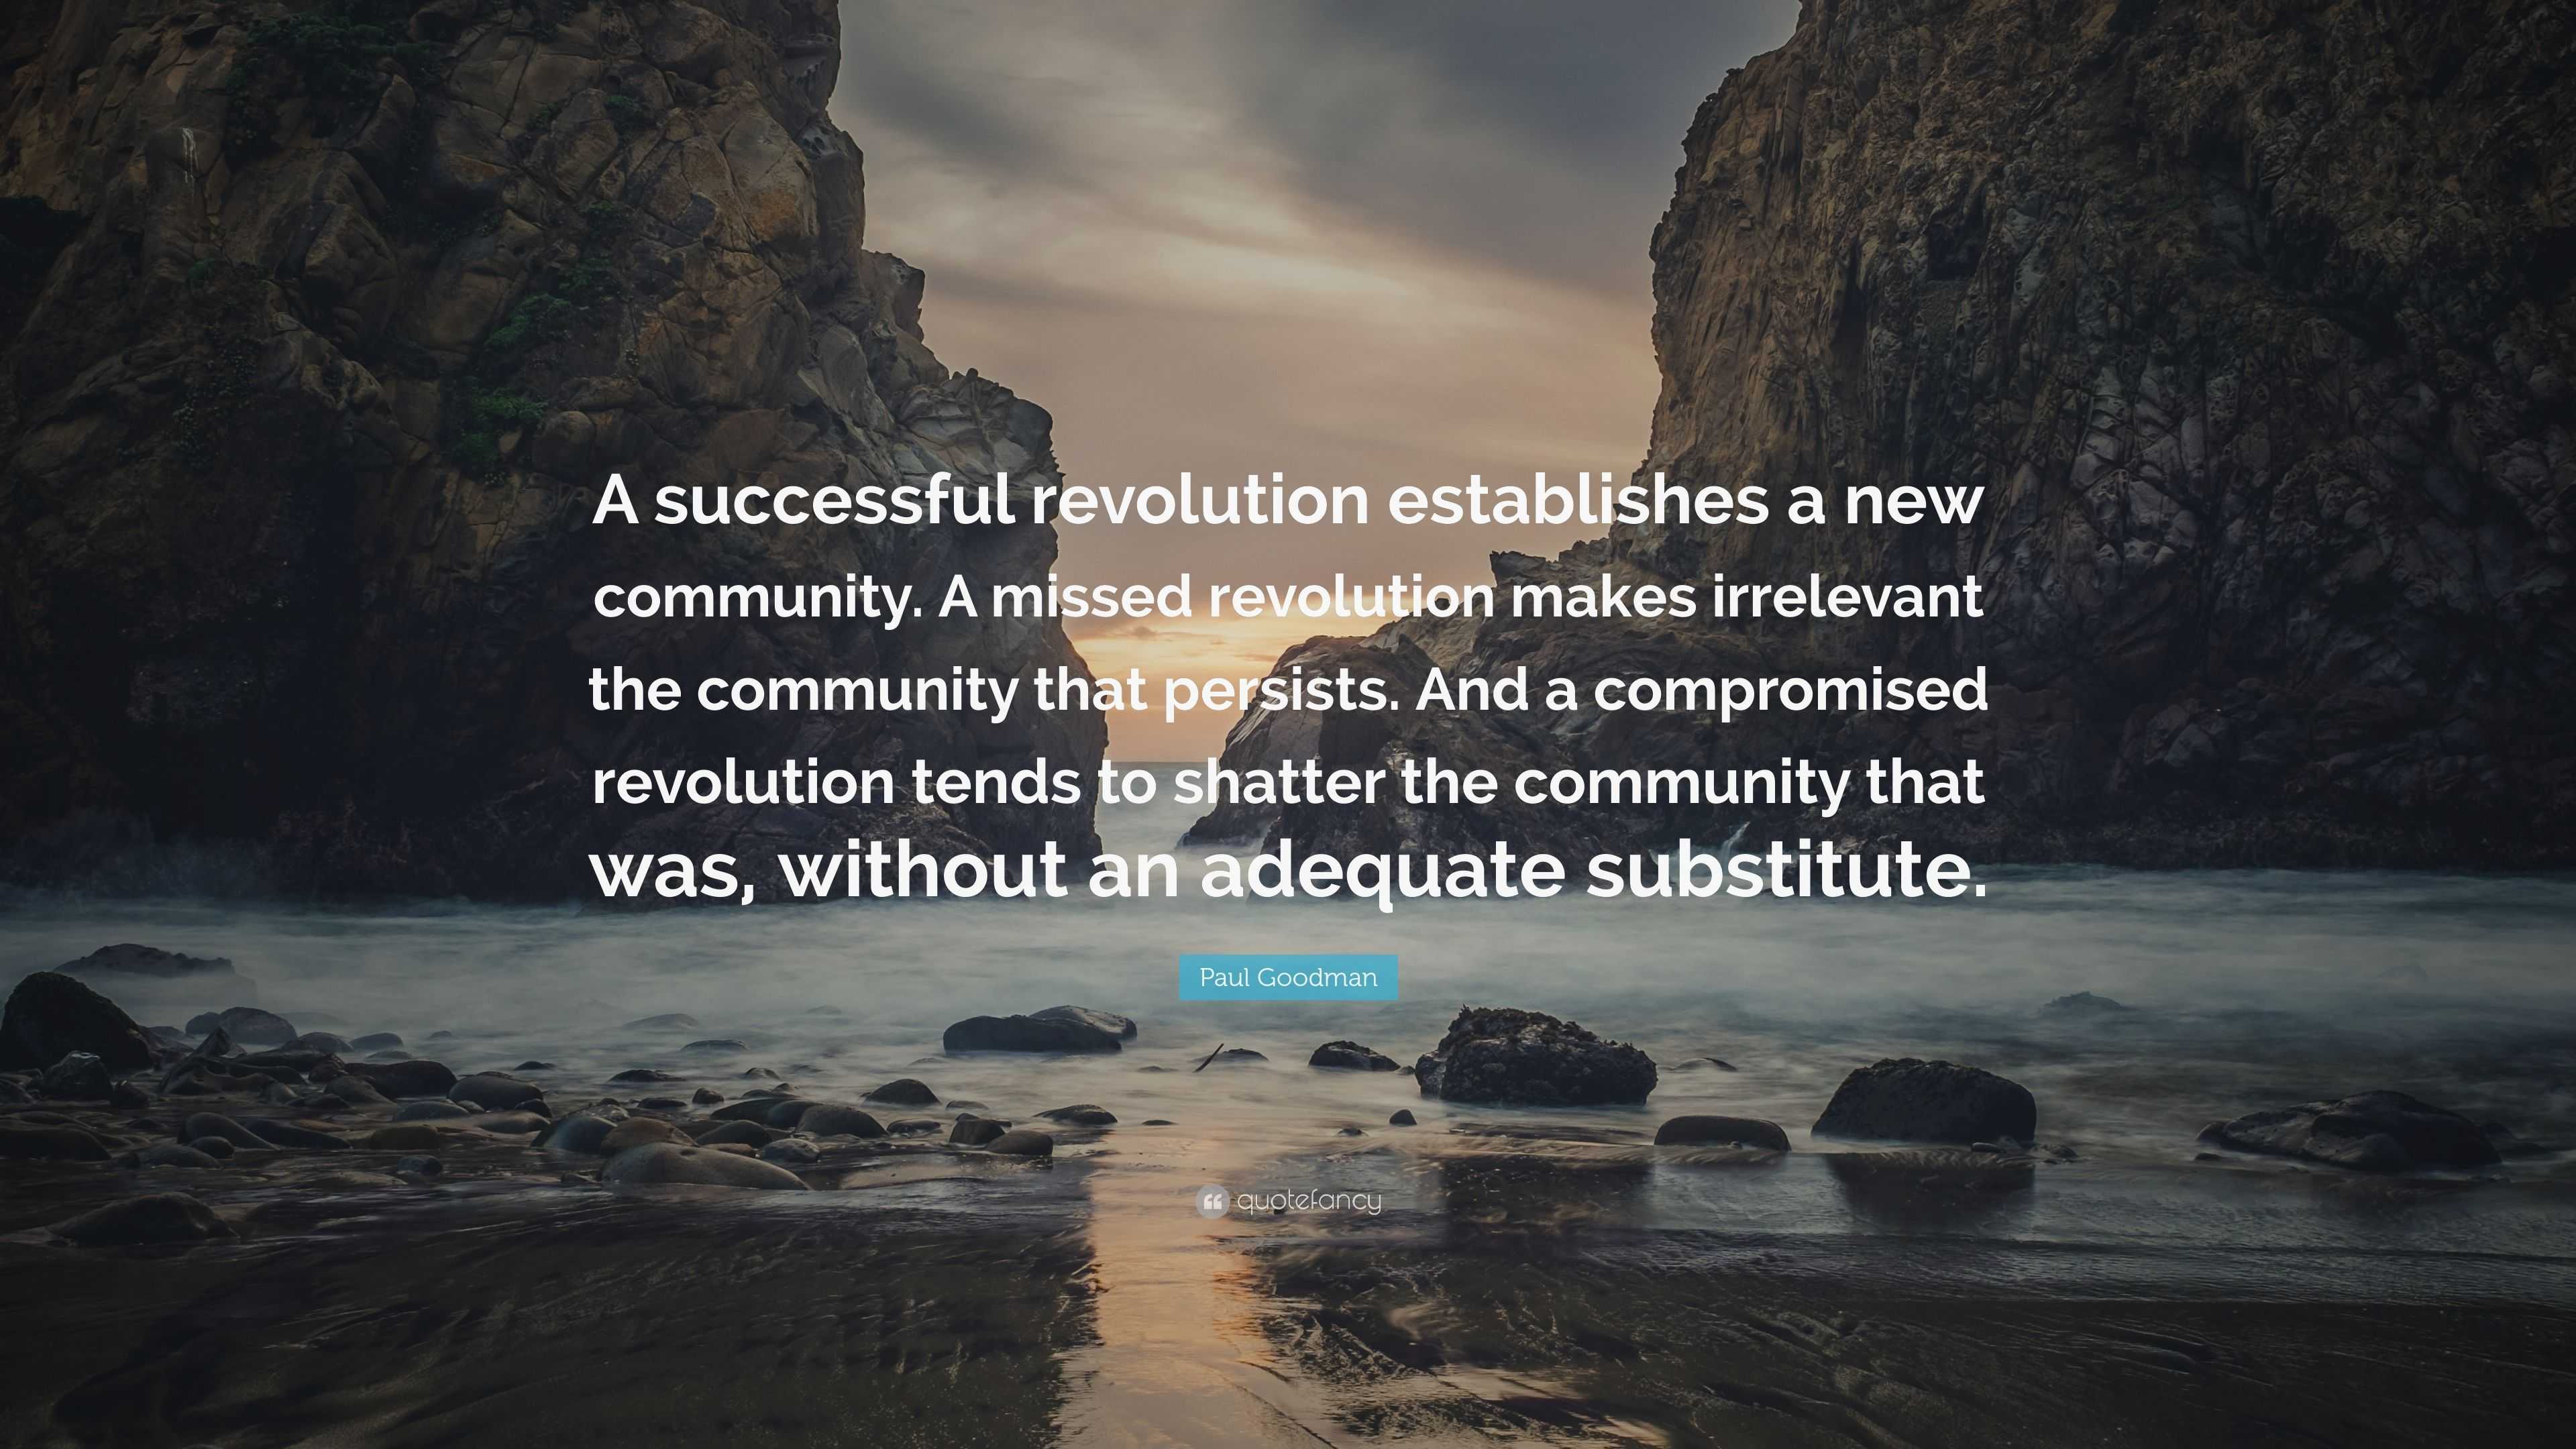 Paul Goodman Quote: “A successful revolution establishes a new